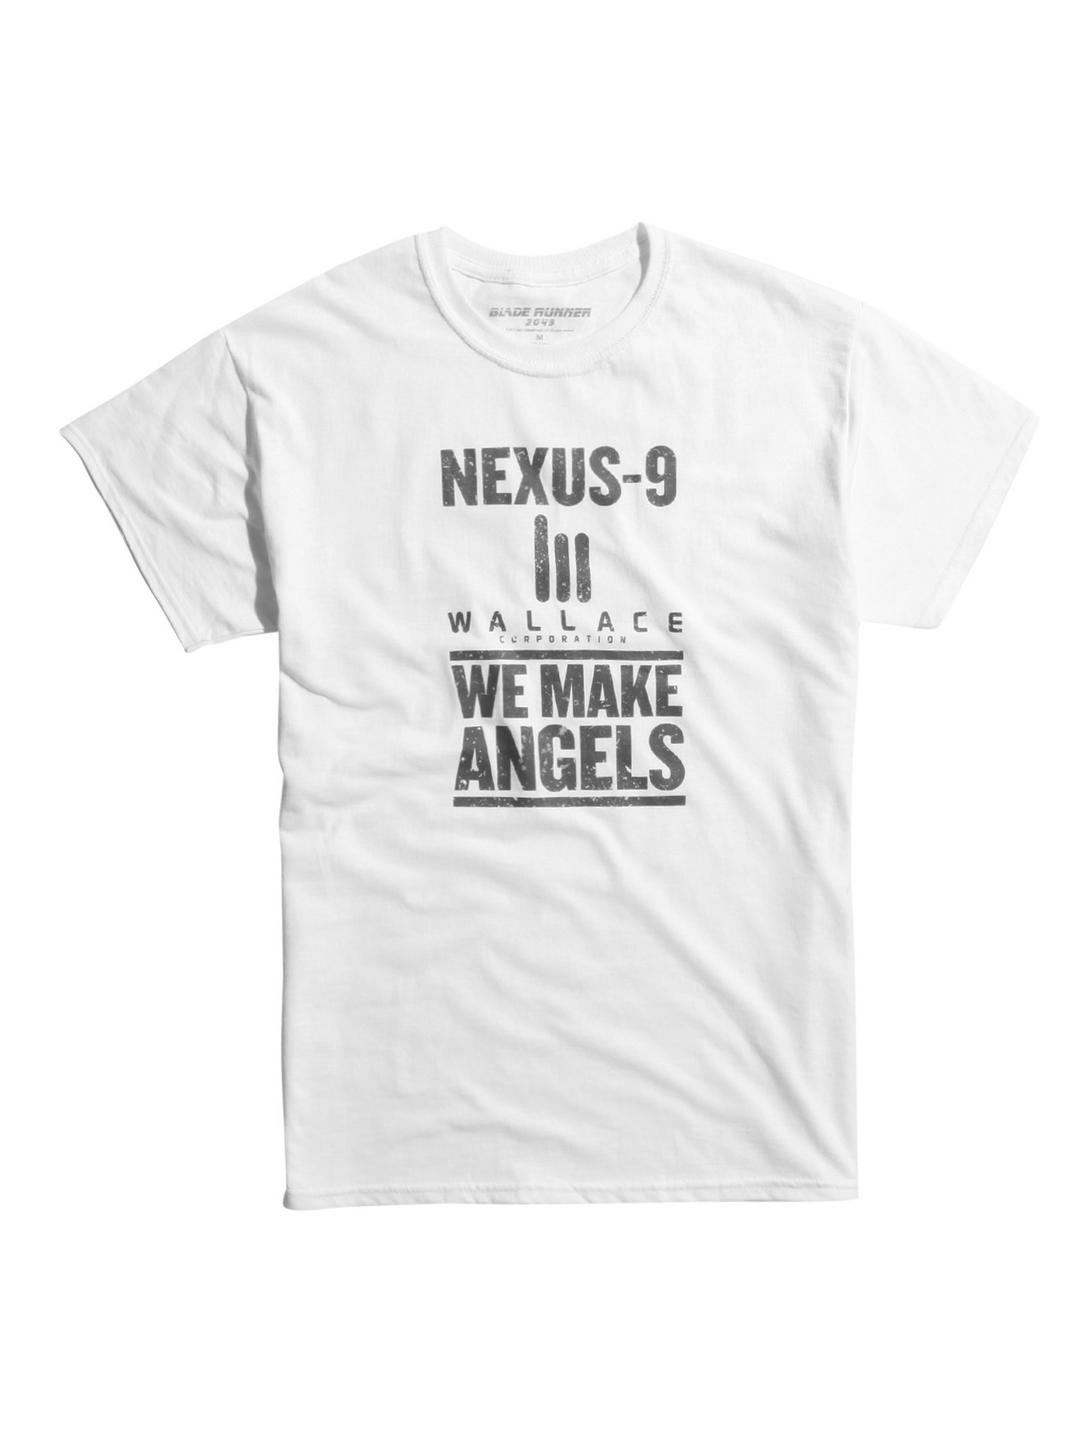 Blade Runner 2049 Nexus 9 T-Shirt, WHITE, hi-res